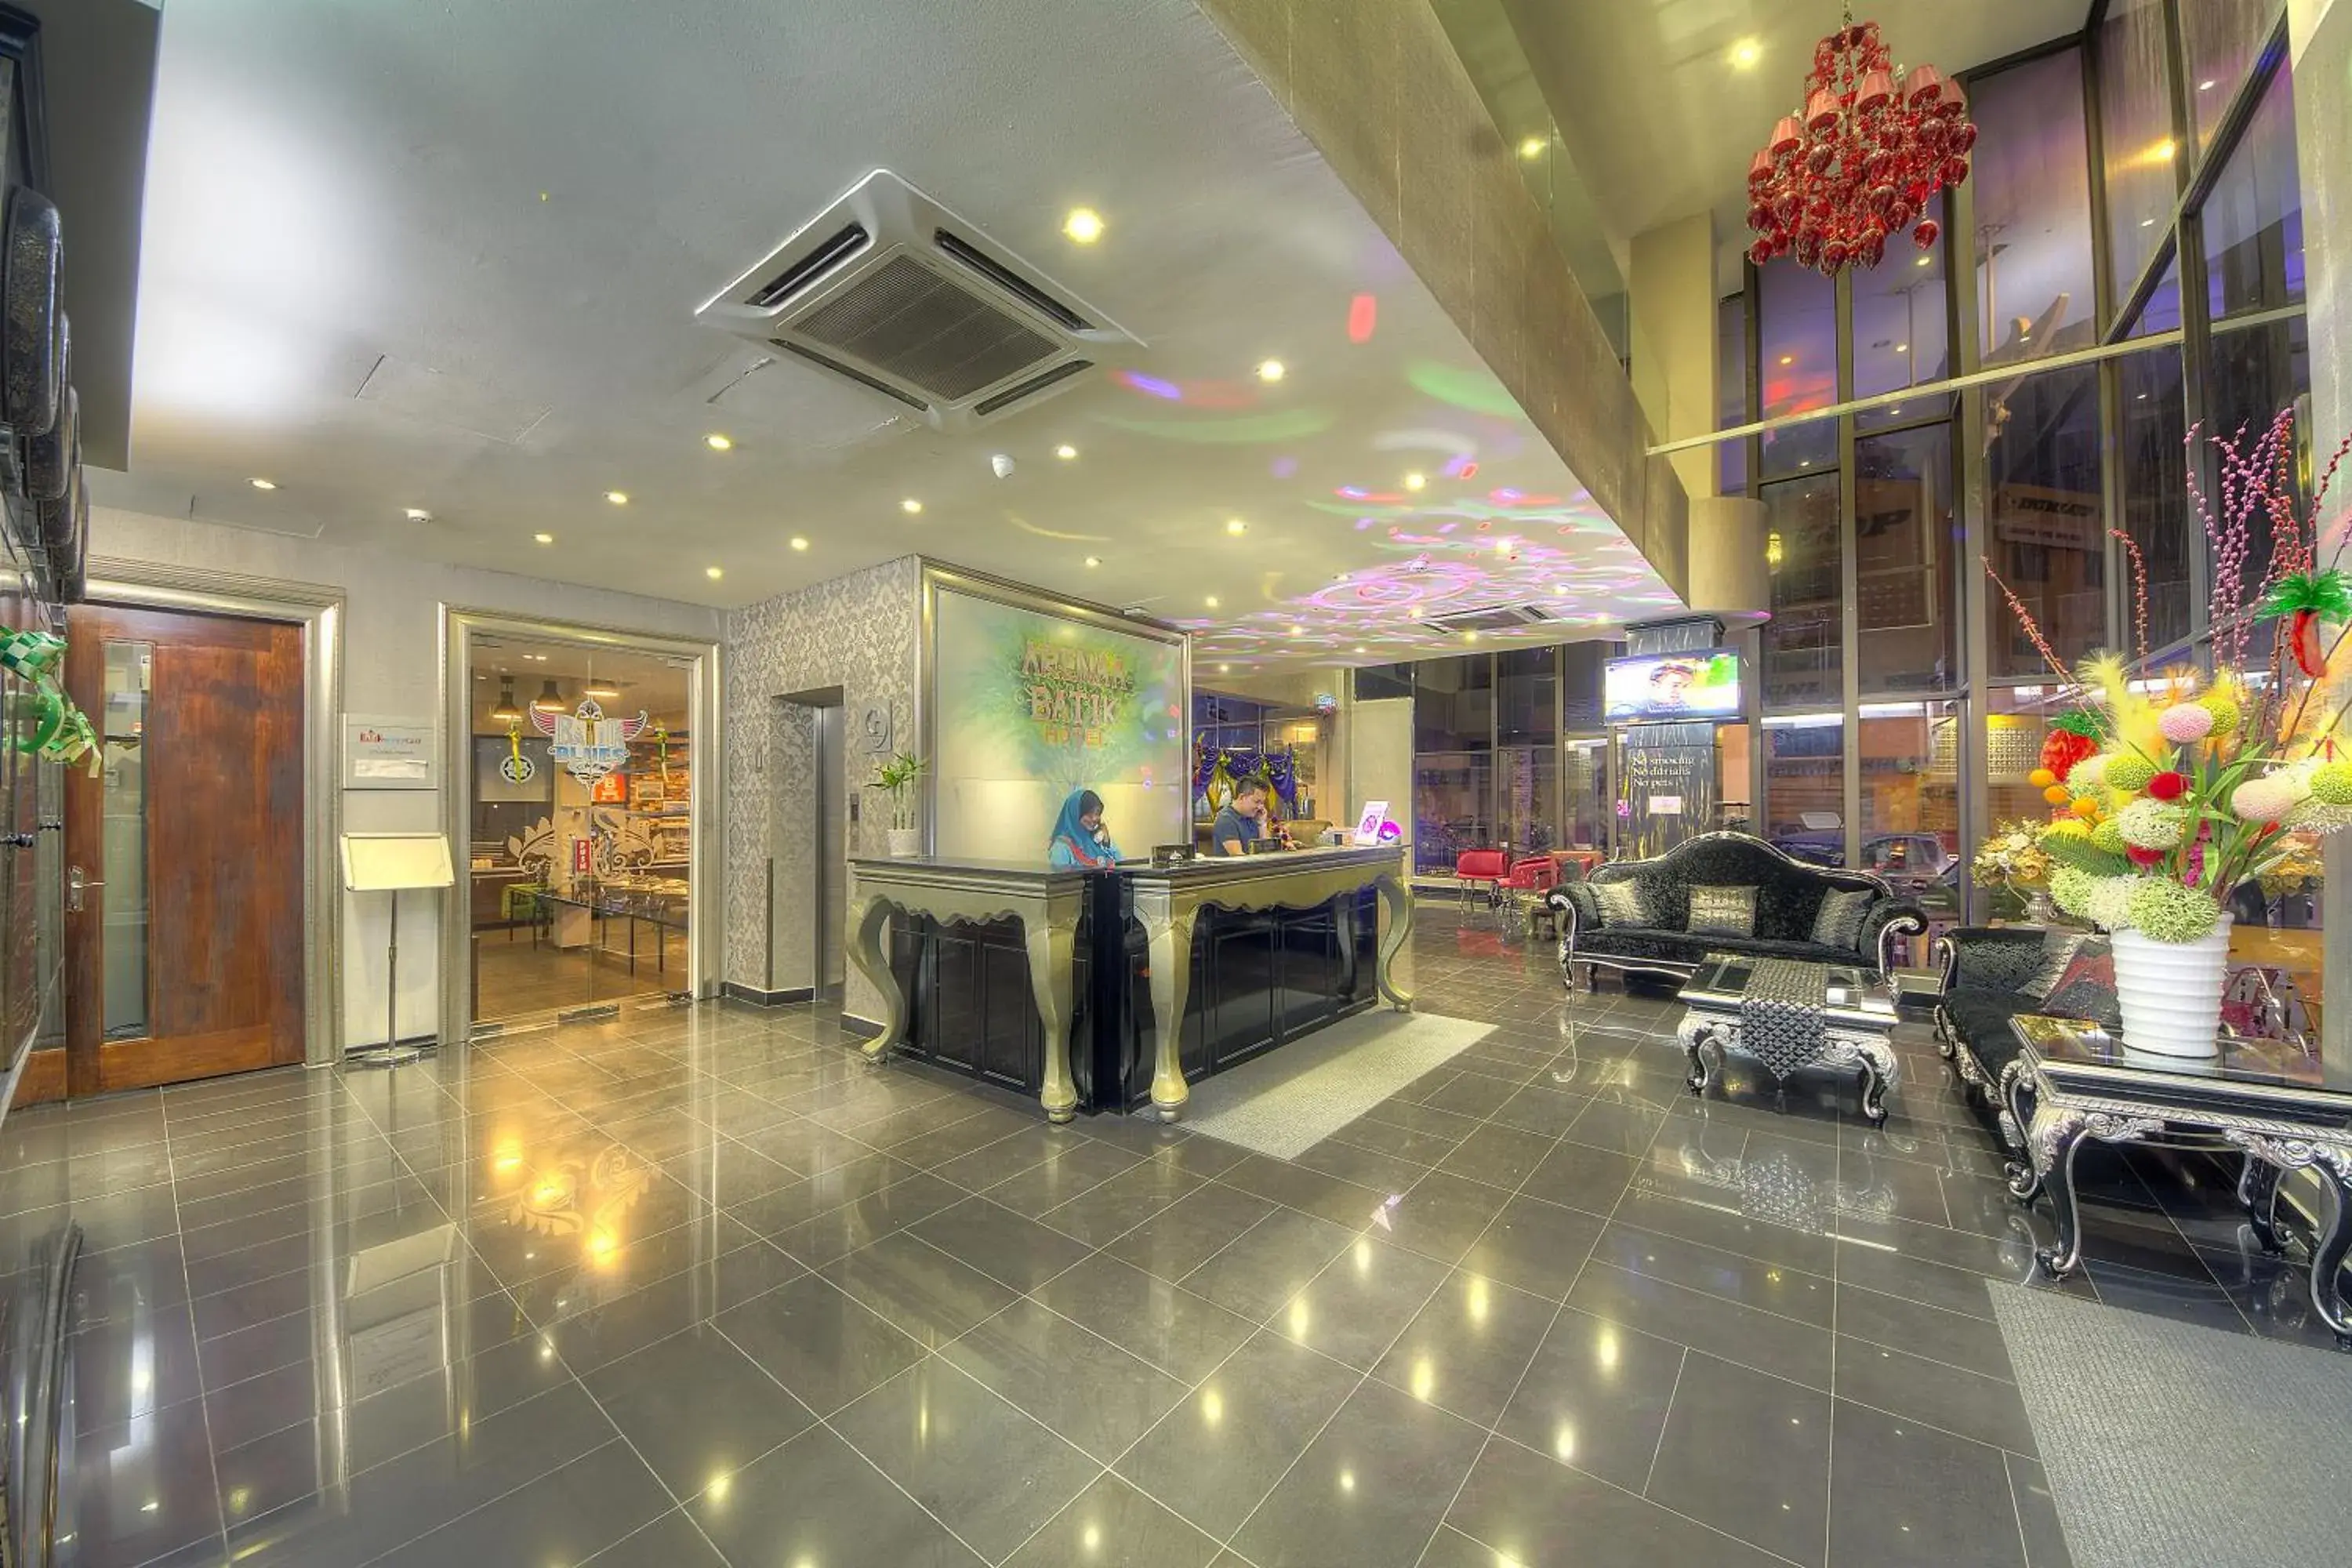 Lobby or reception, Lobby/Reception in Arenaa Batik Boutique Hotel